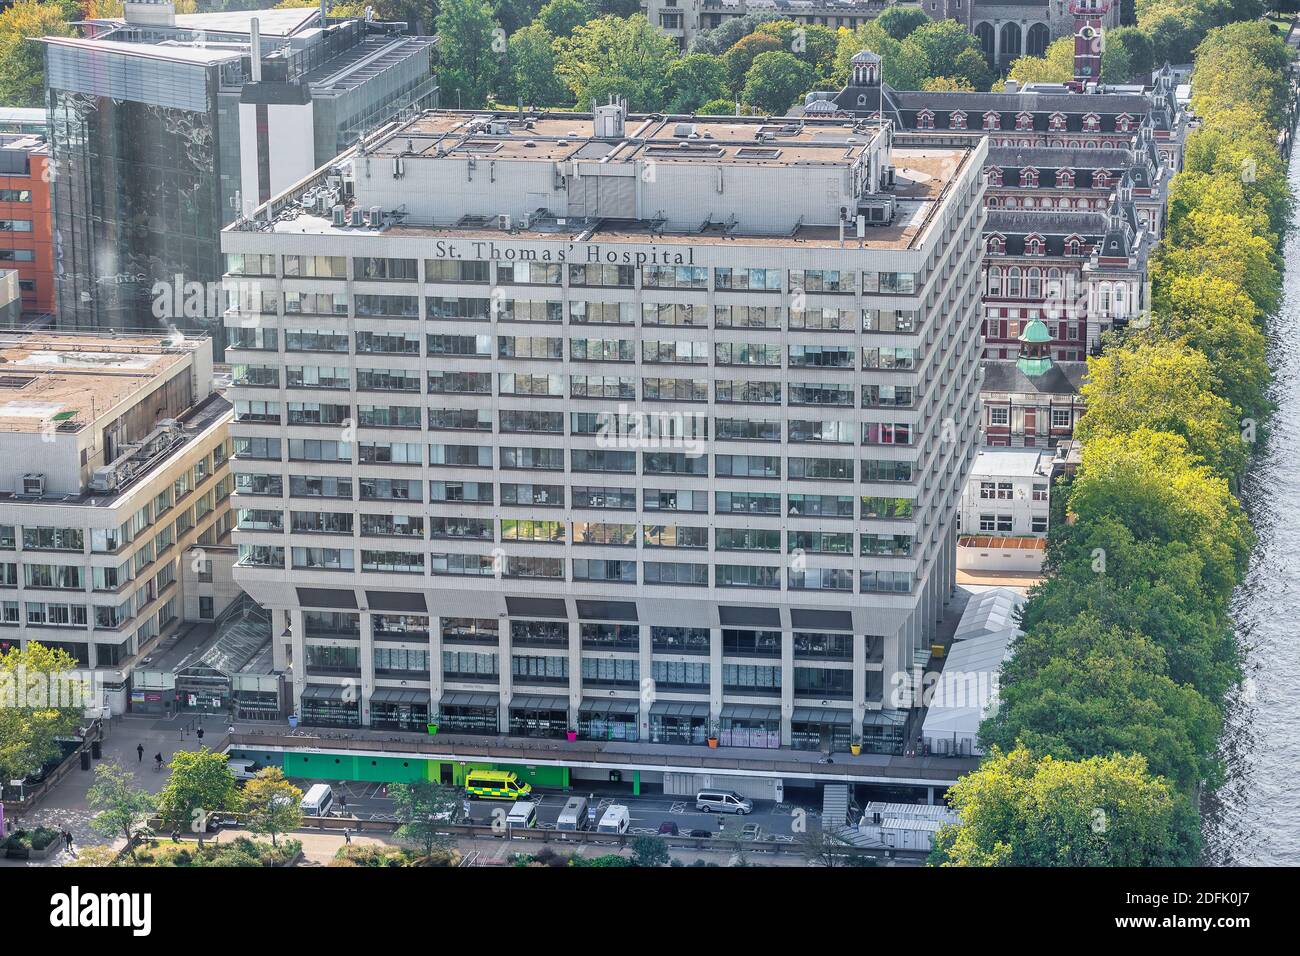 LONDRES, REINO UNIDO - 28 DE SEPTIEMBRE de 2020: Vista aérea del hospital de St Thomas Foto de stock